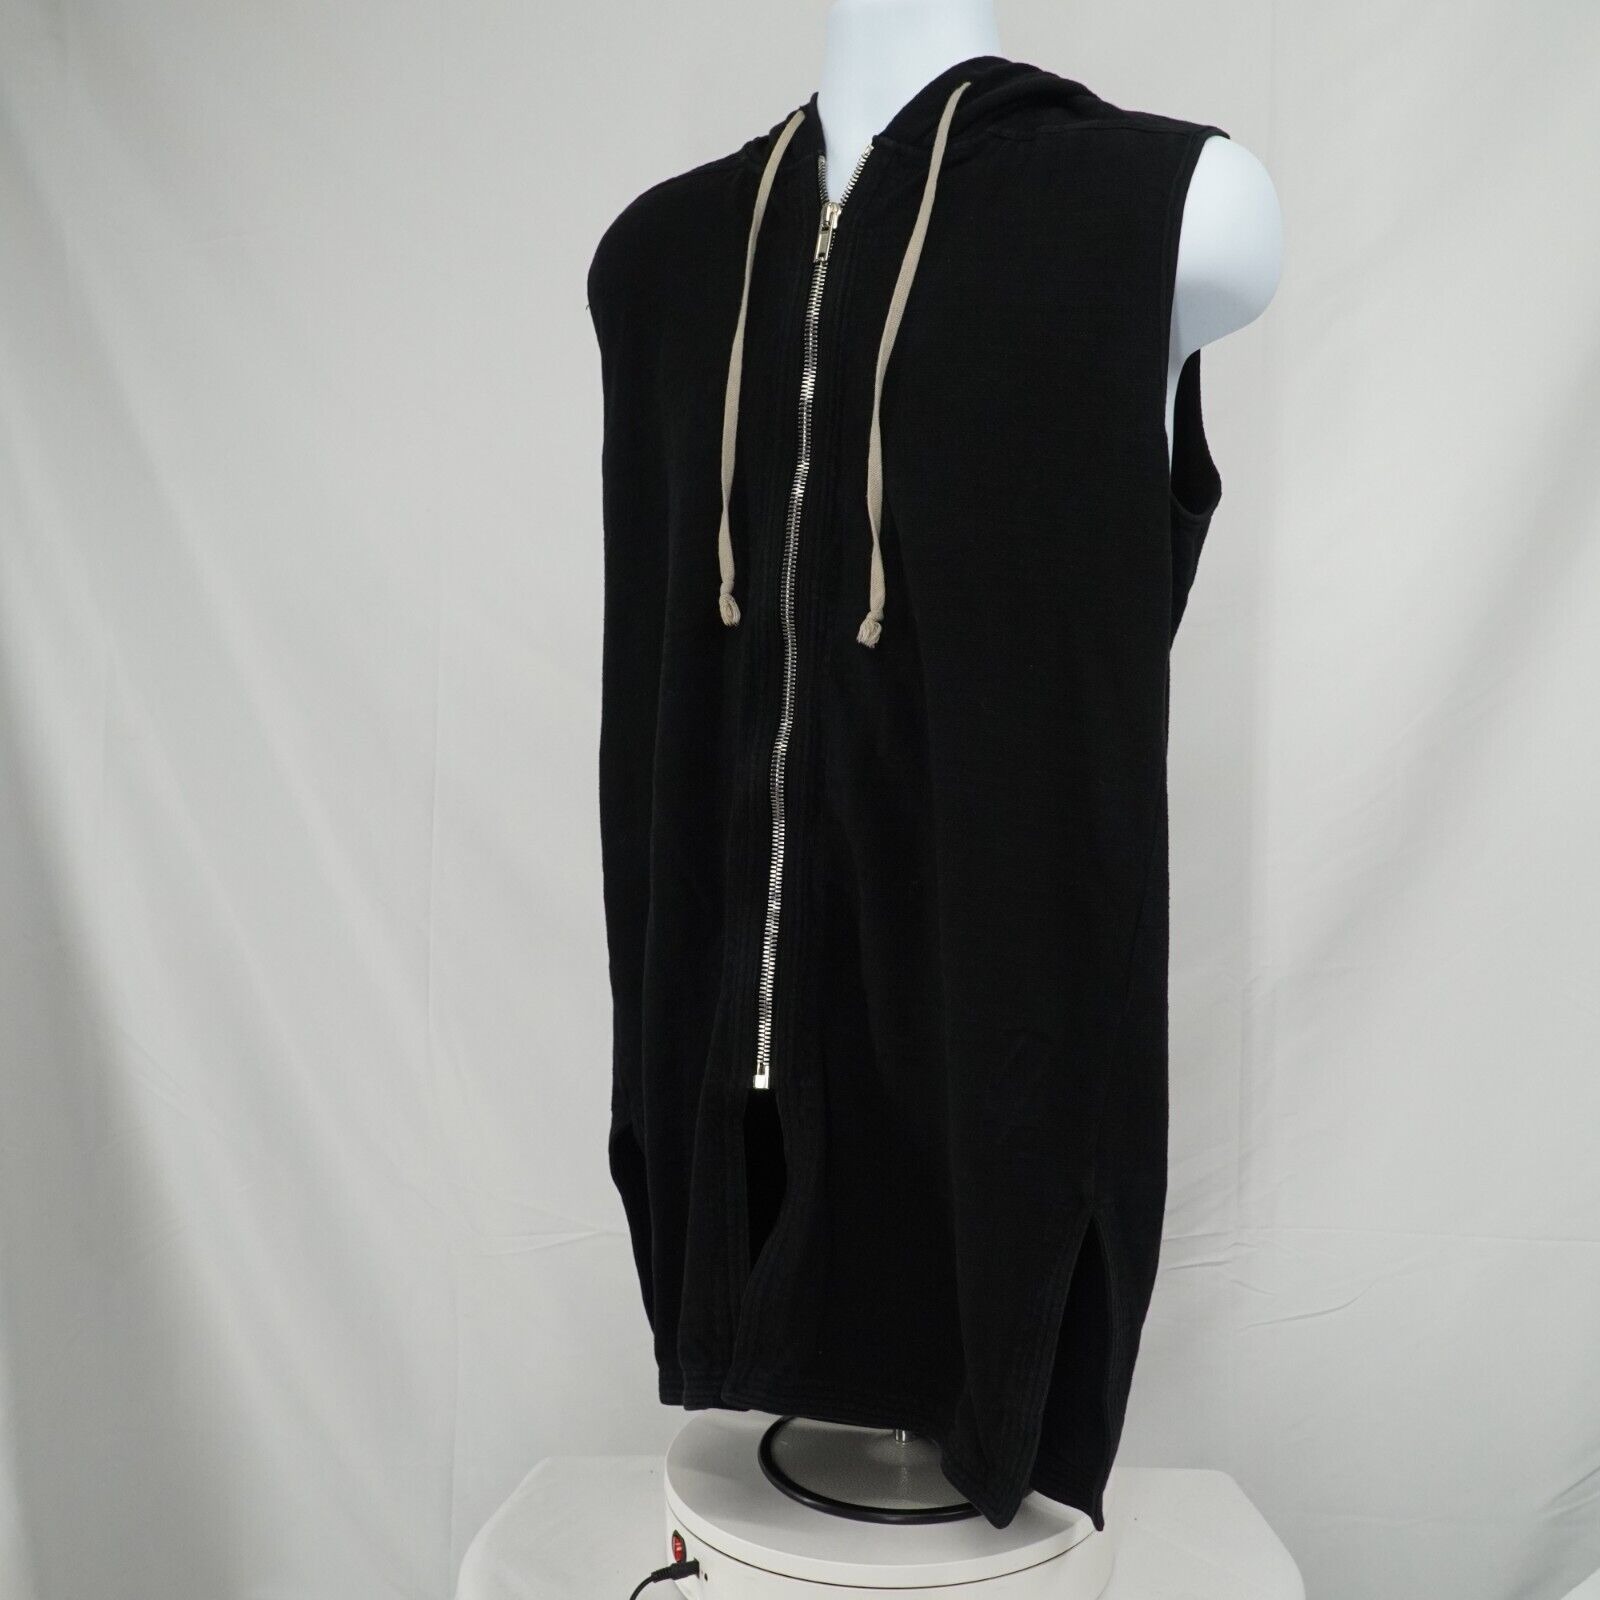 Black Zip Up Sleeveless Jacket Hoodie Cotton - Medium - 2